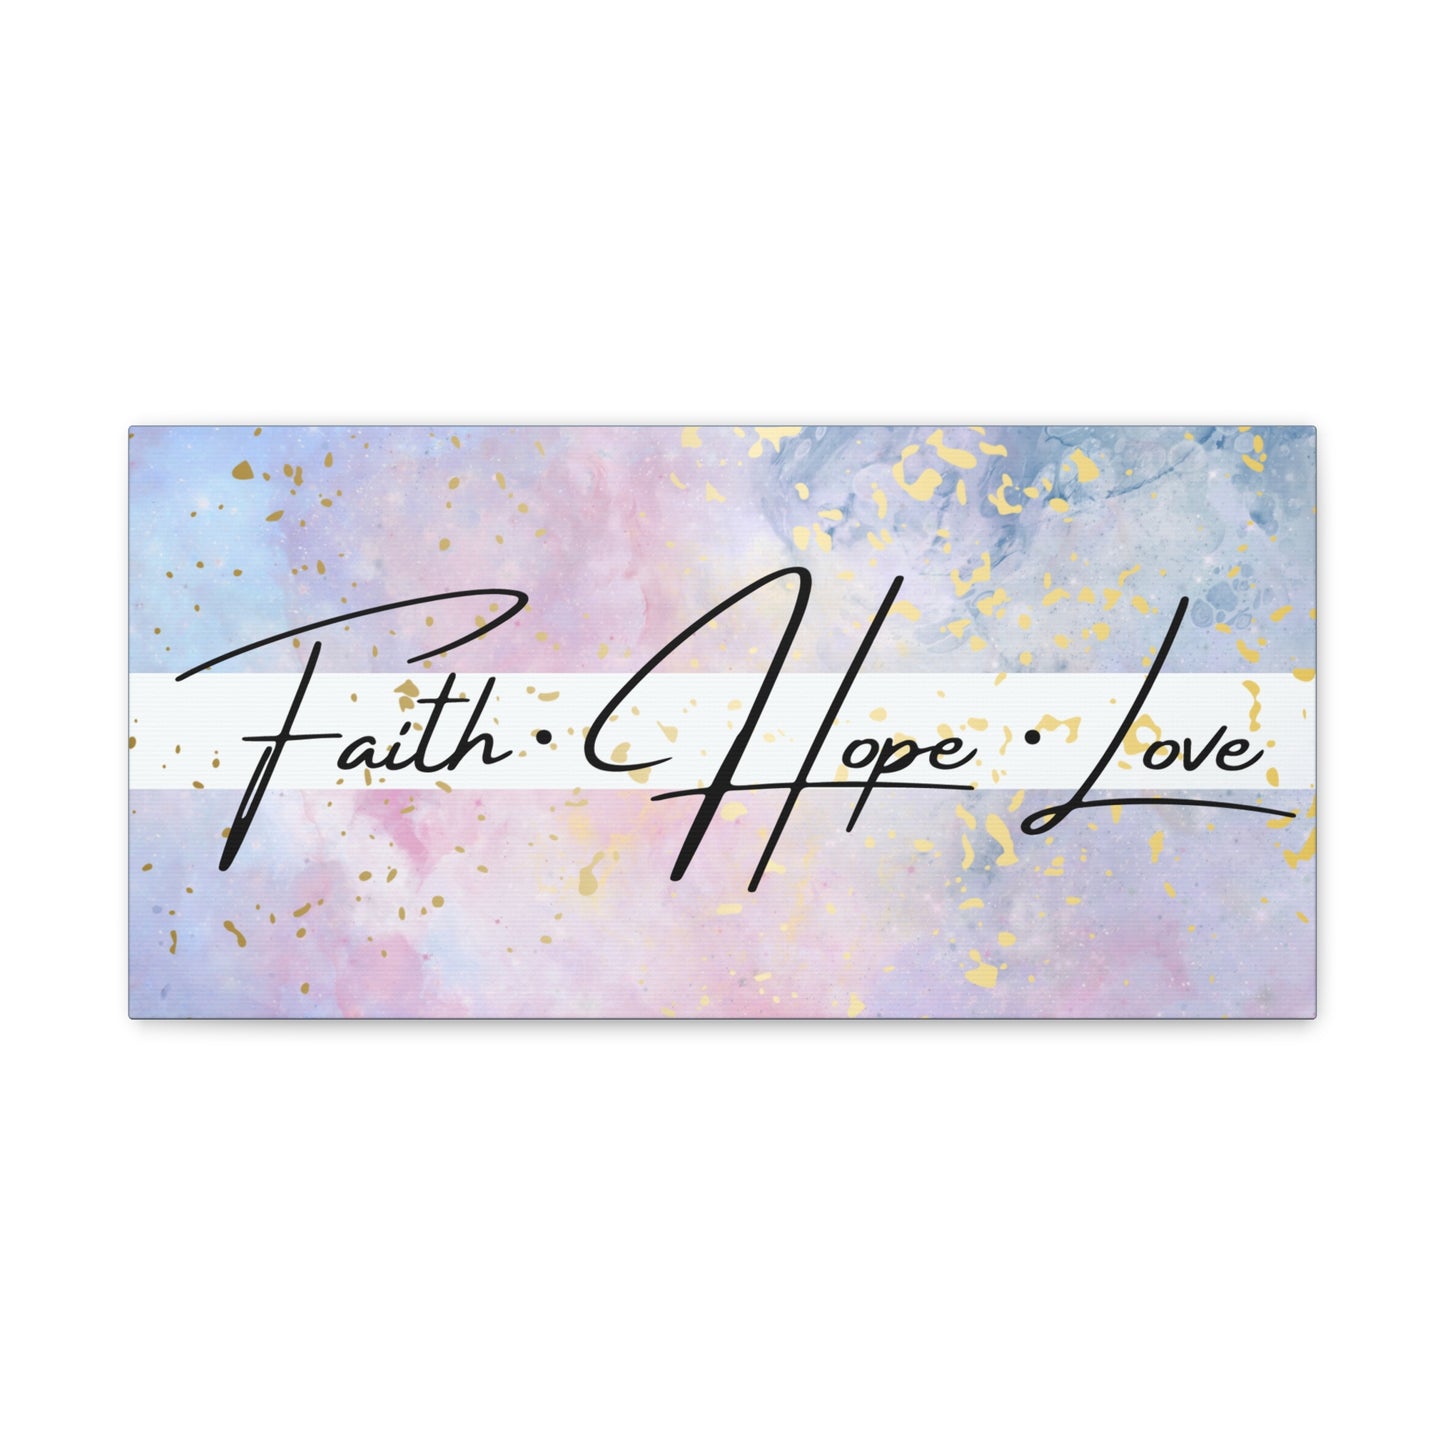 Christian Wall Art: Faith Love Hope (Wood Frame Ready to Hang)